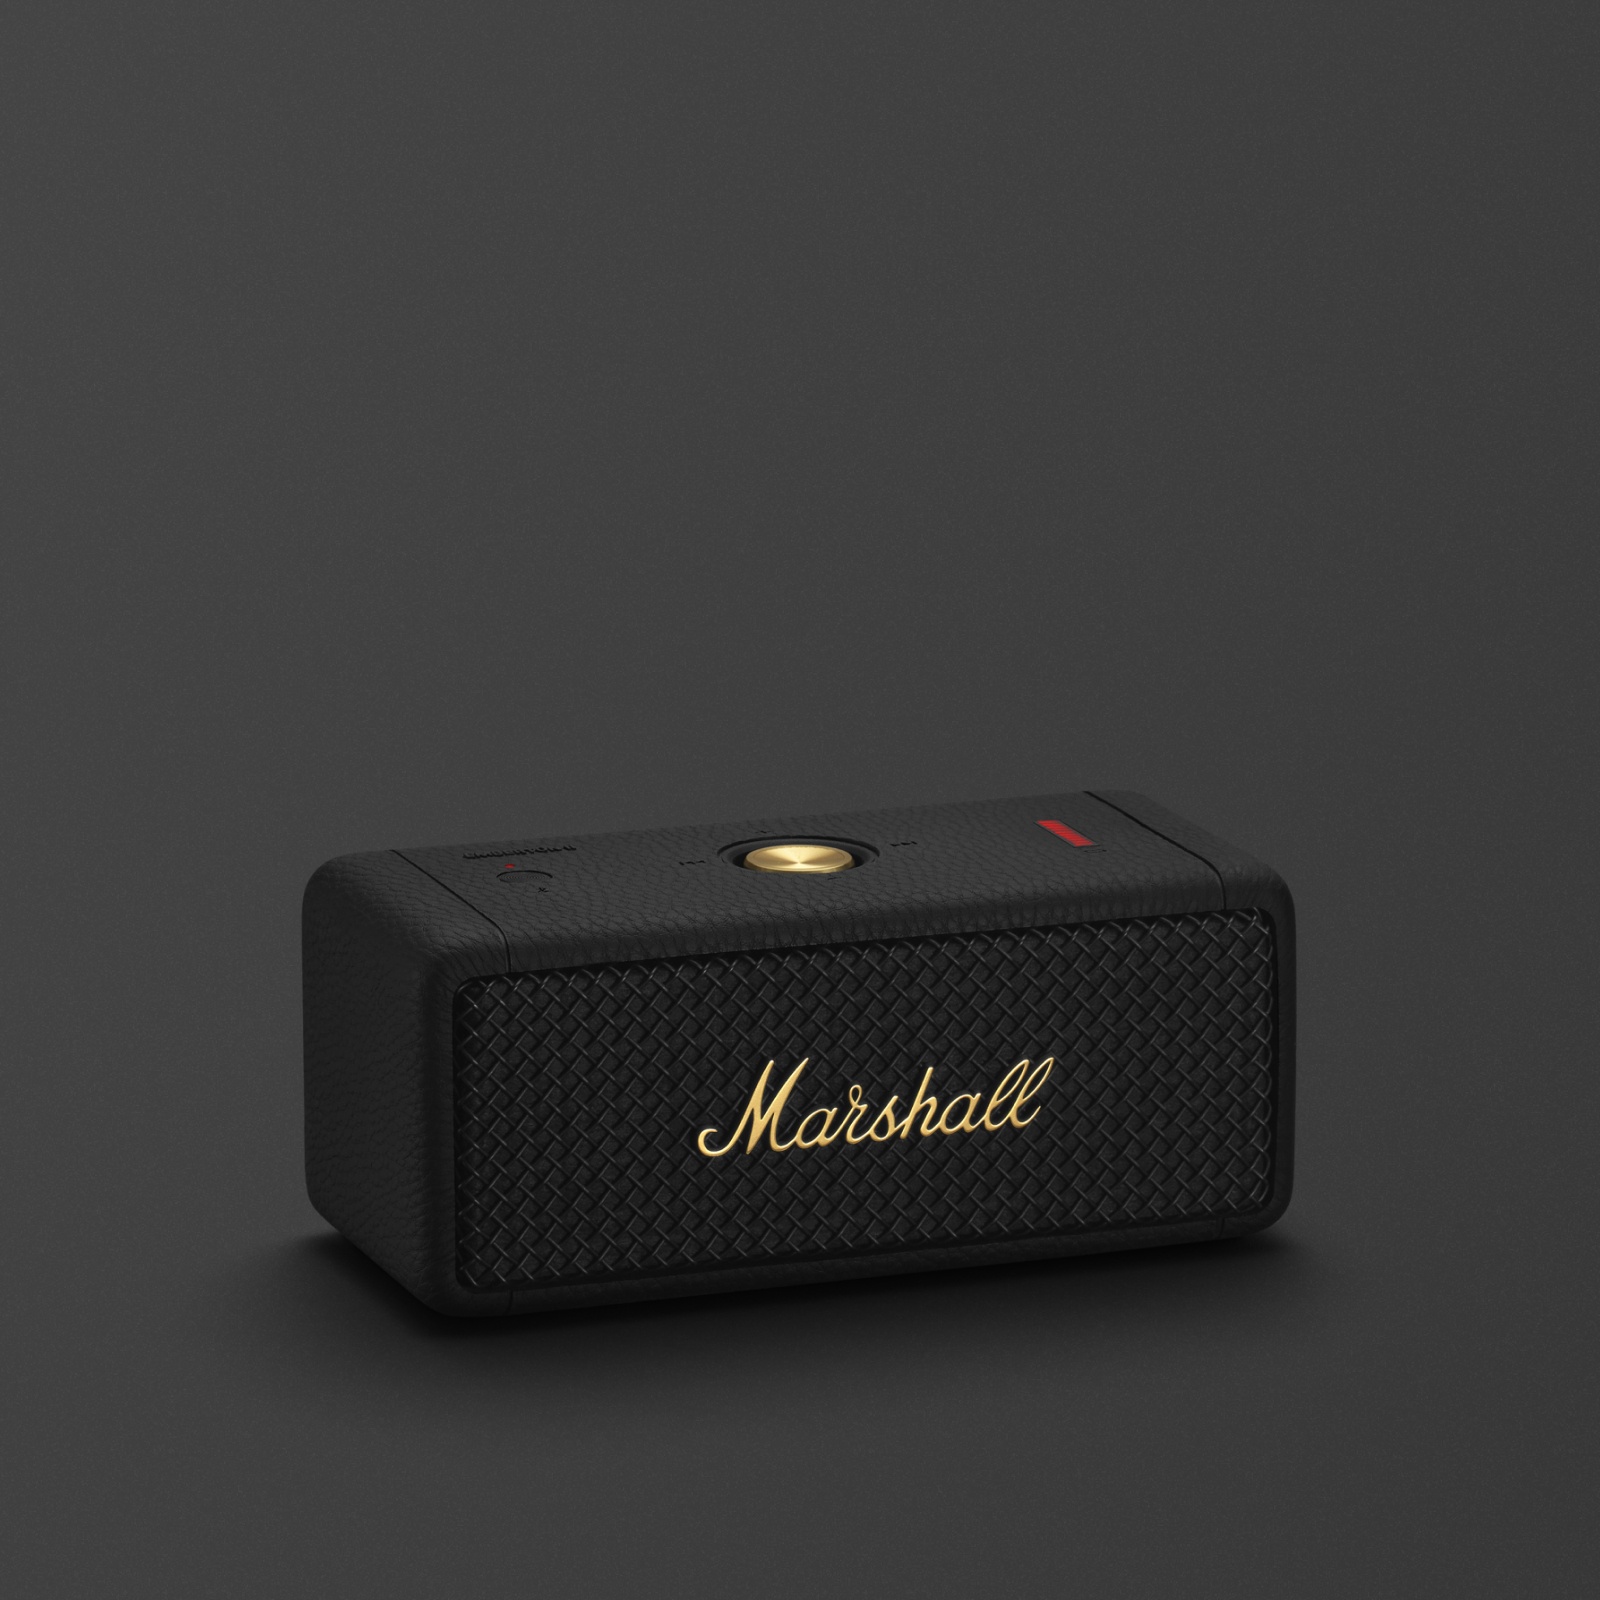 Emberton II outdoor speaker offers powerful sound for adventures |  Marshall.com